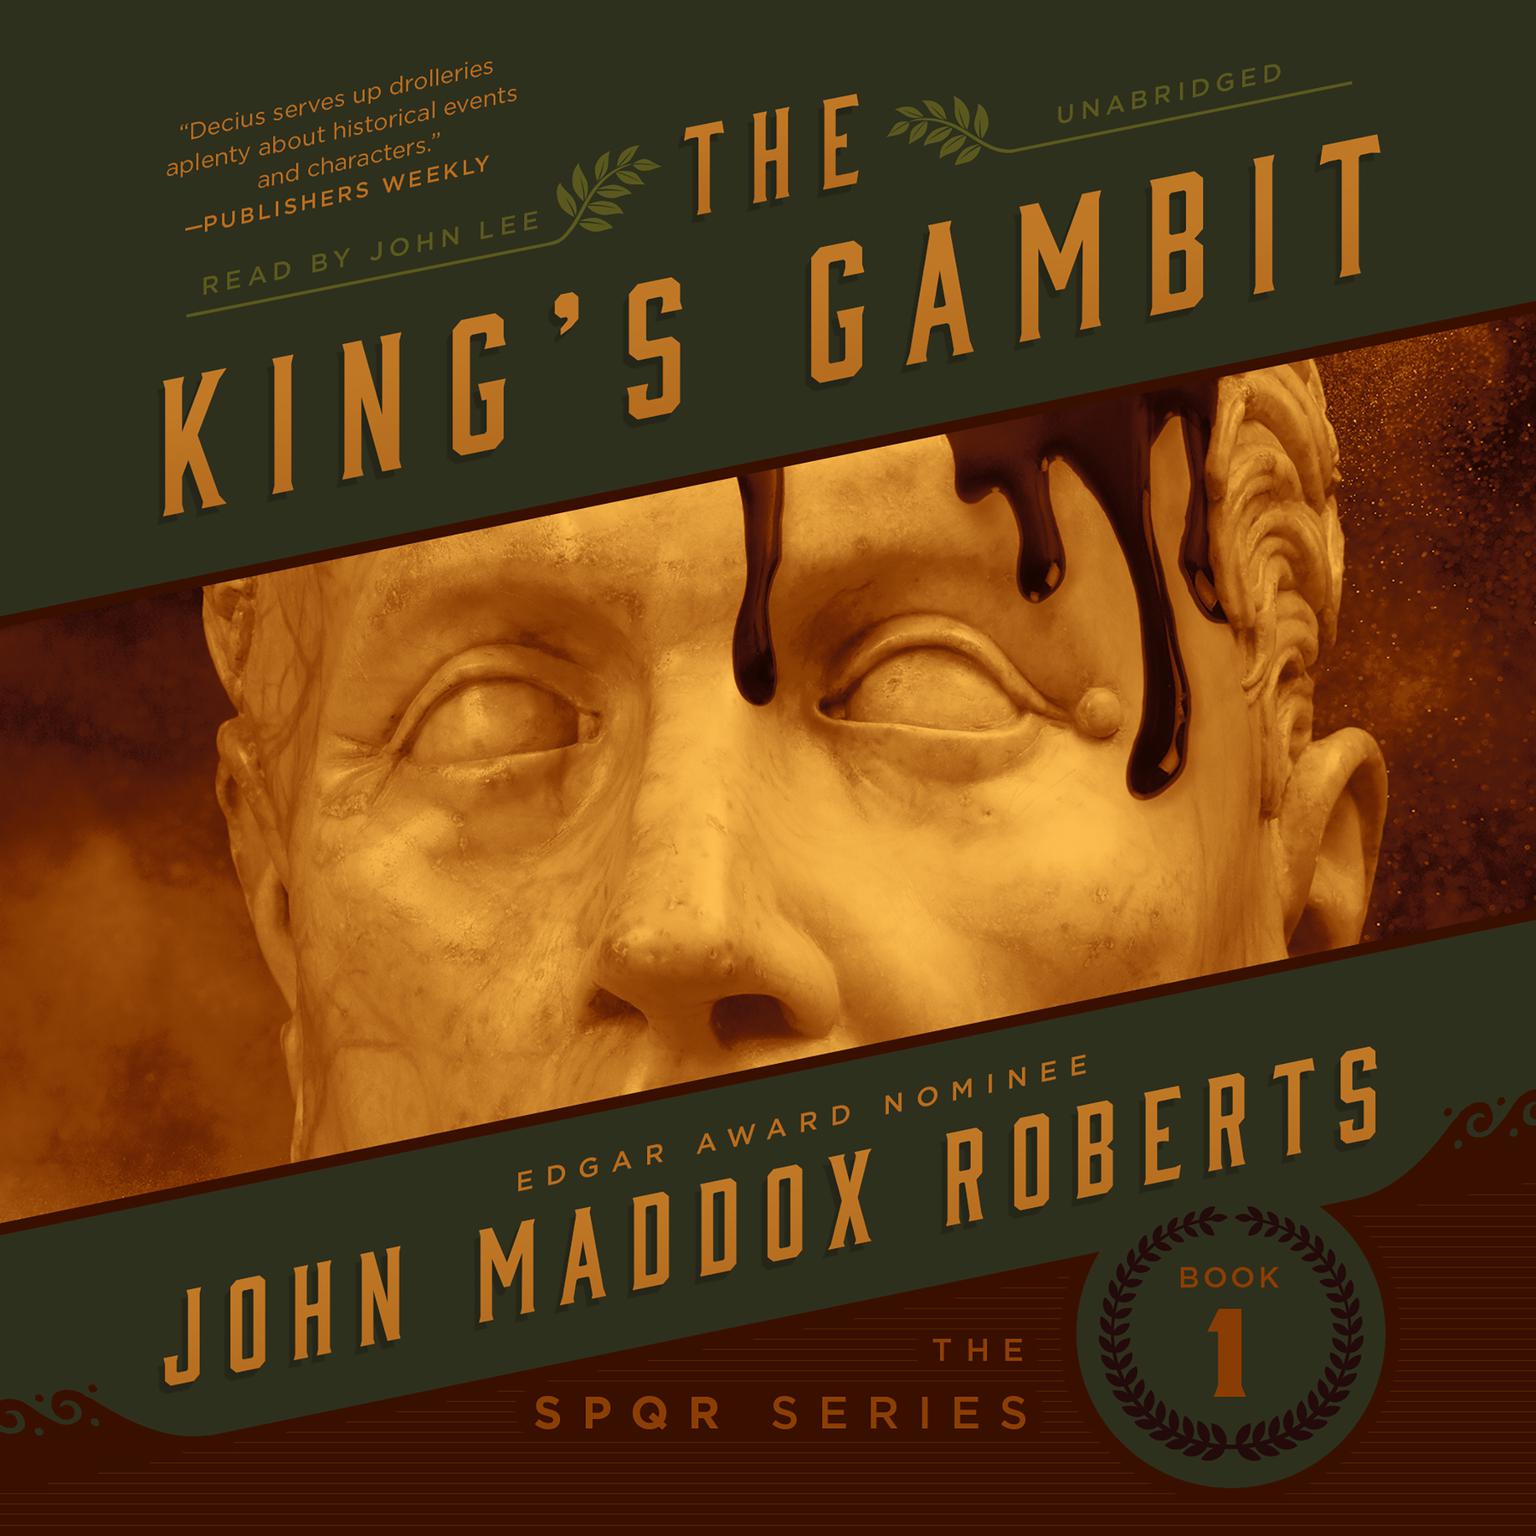 The King’s Gambit Audiobook, by John Maddox Roberts